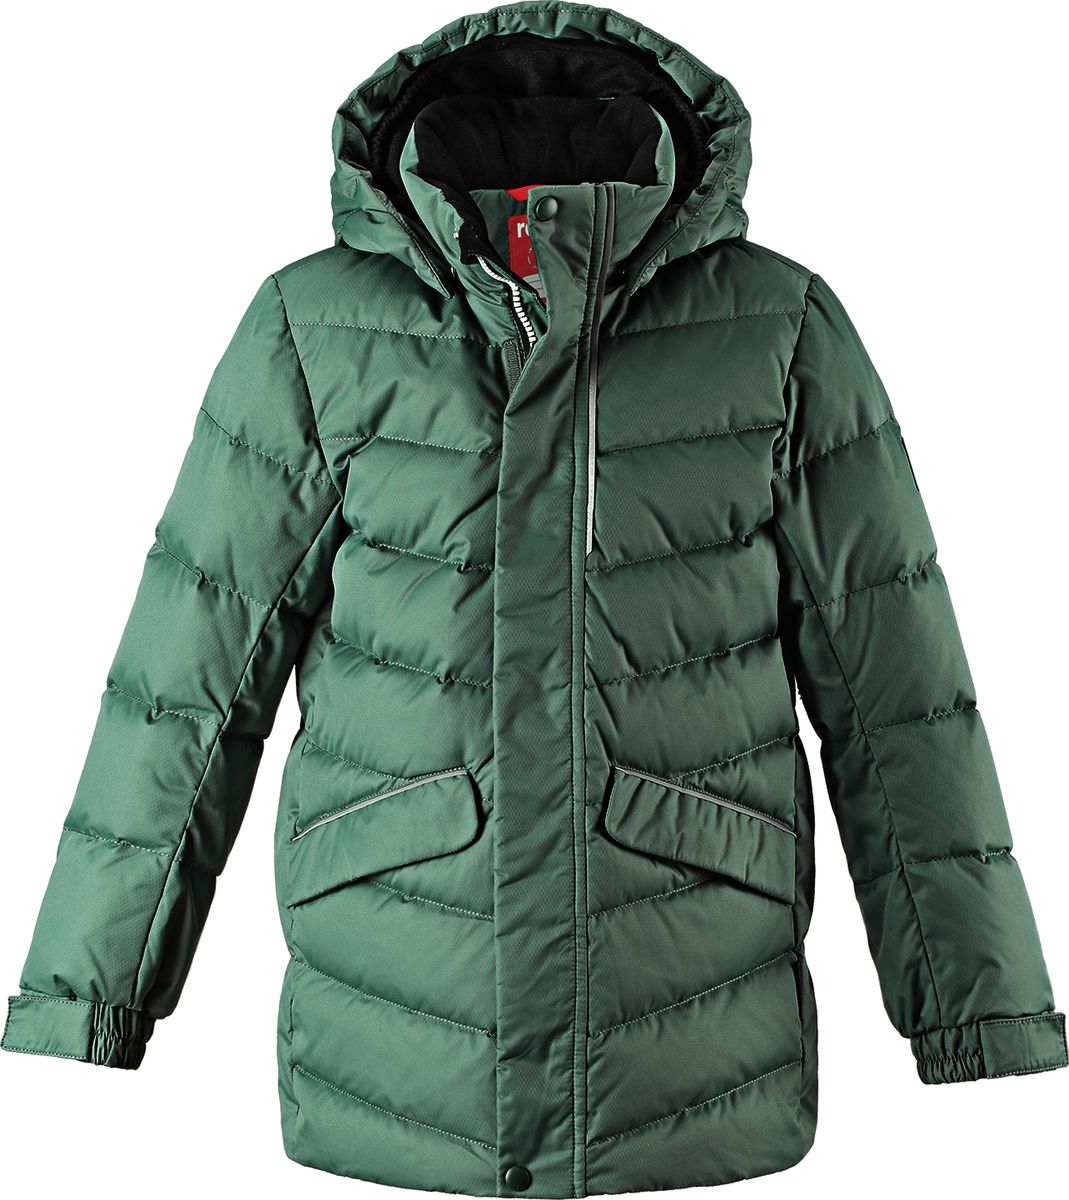 Куртка для мальчика Reima Janne, цвет: зеленый. 5313718630. Размер 116